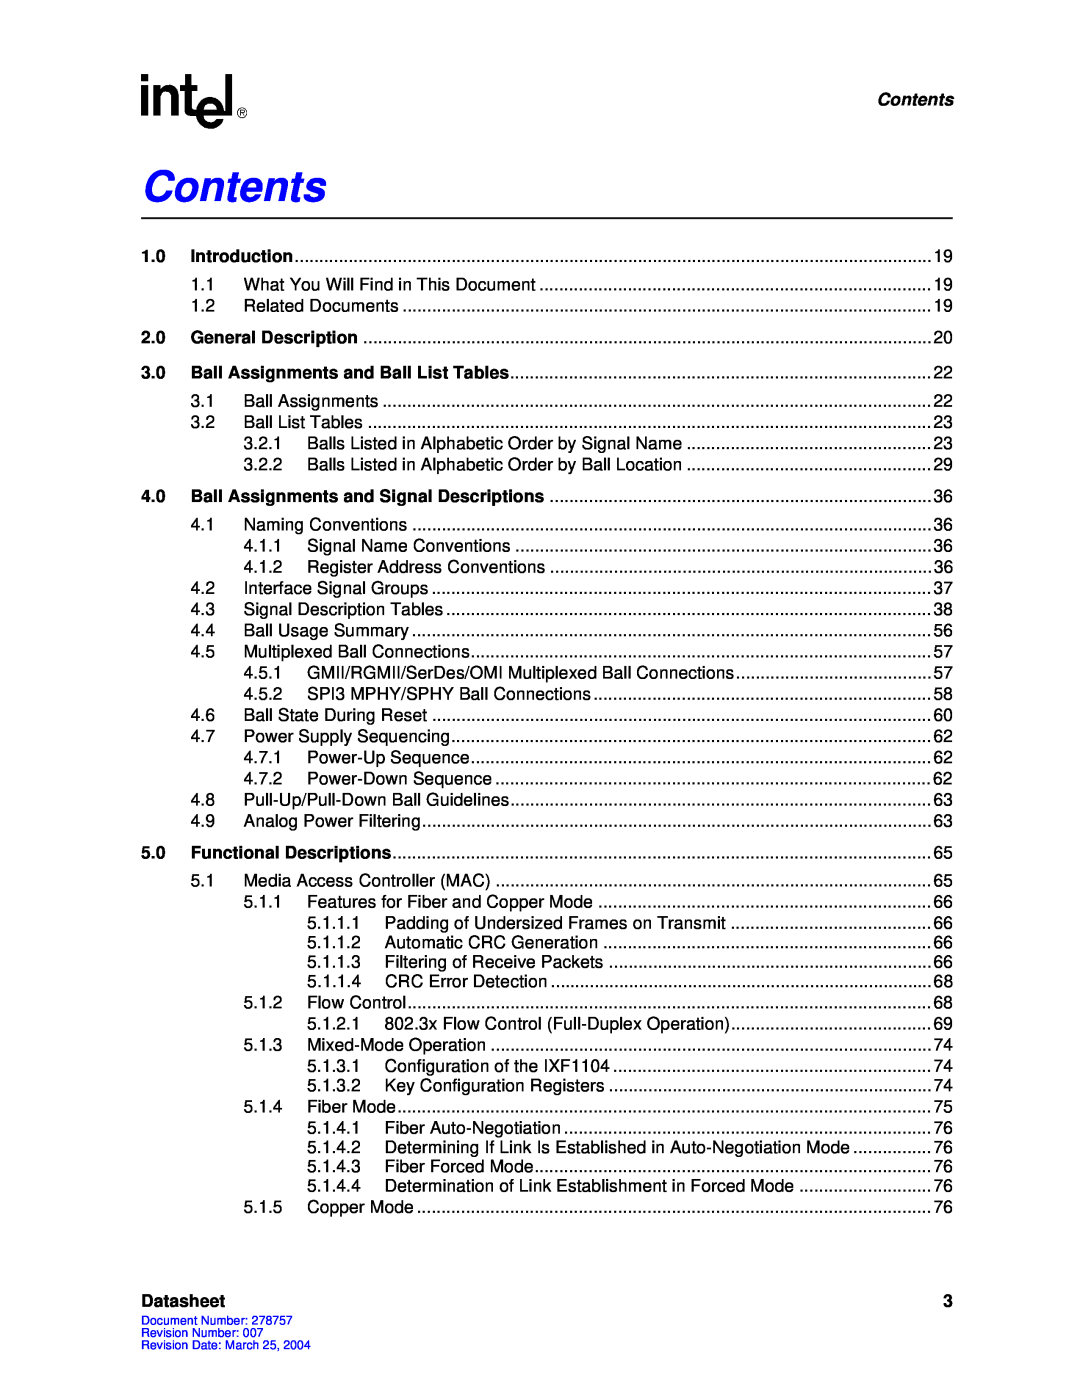 Intel IXF1104 manual Contents, Introduction, Datasheet 